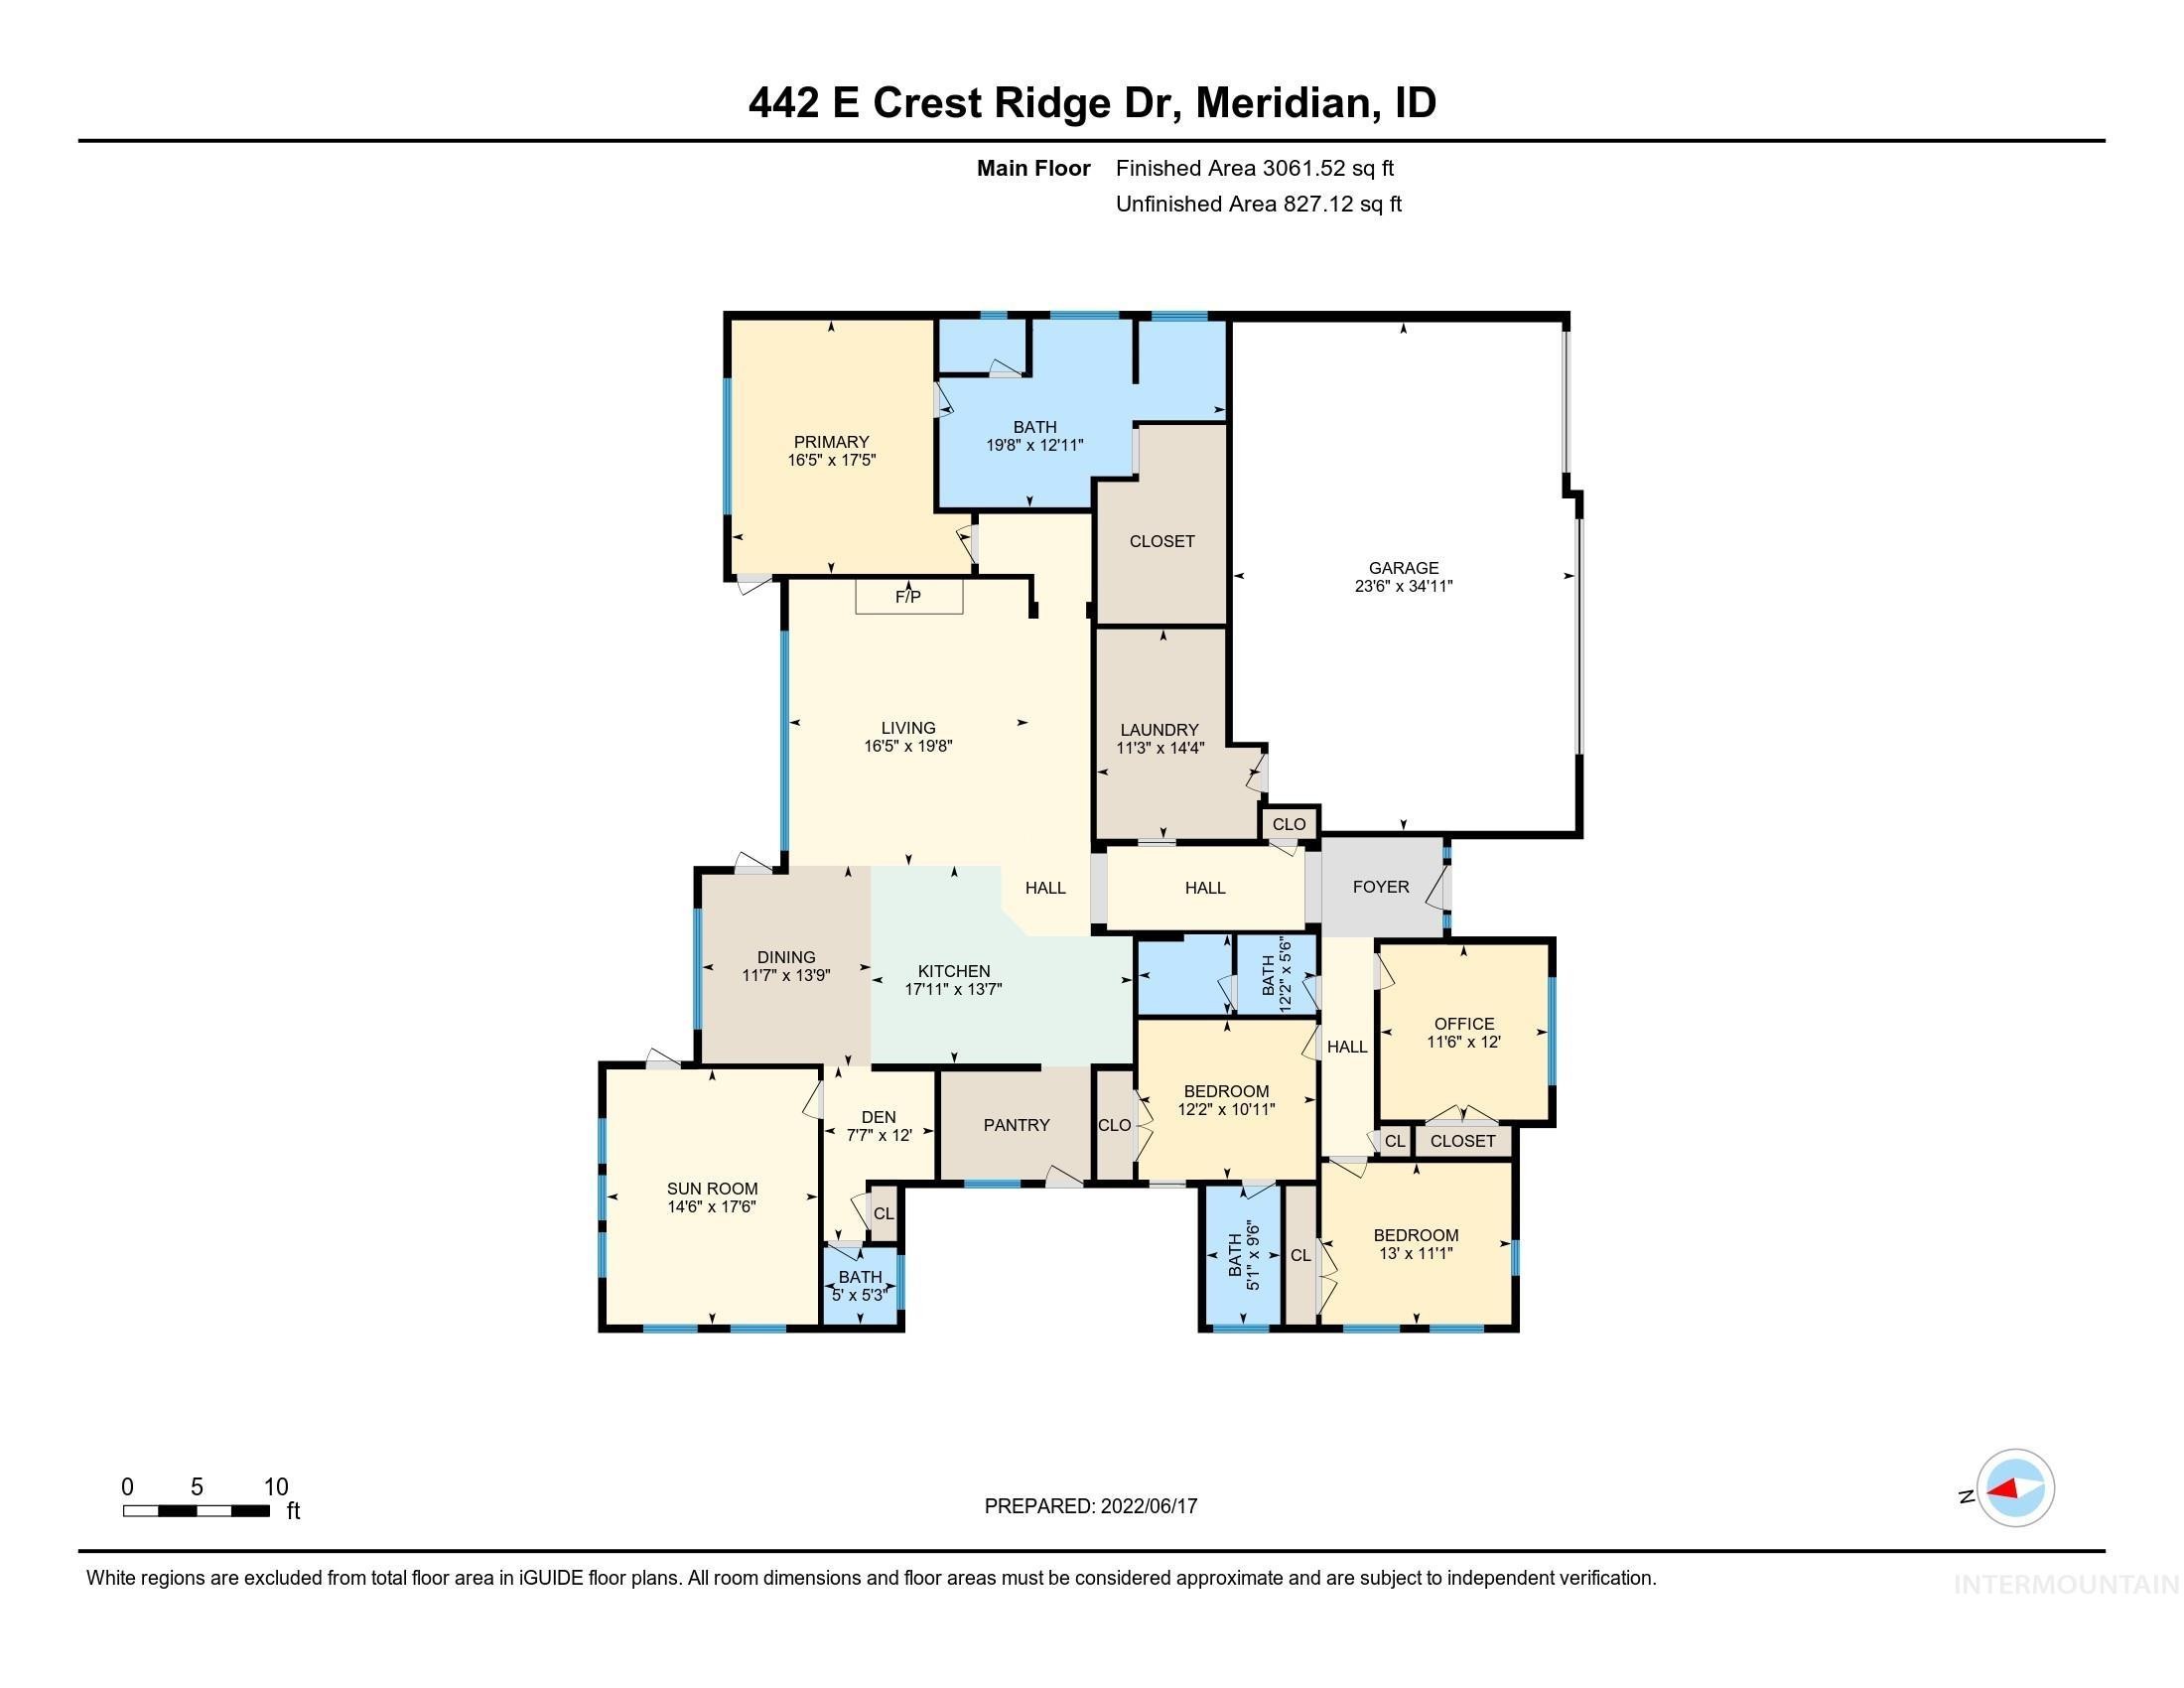 442 Crest Ridge Drive, Meridian, Idaho, 83642, United States, 4 Bedrooms Bedrooms, ,4 BathroomsBathrooms,Residential,For Sale,442 Crest Ridge Drive,1445555